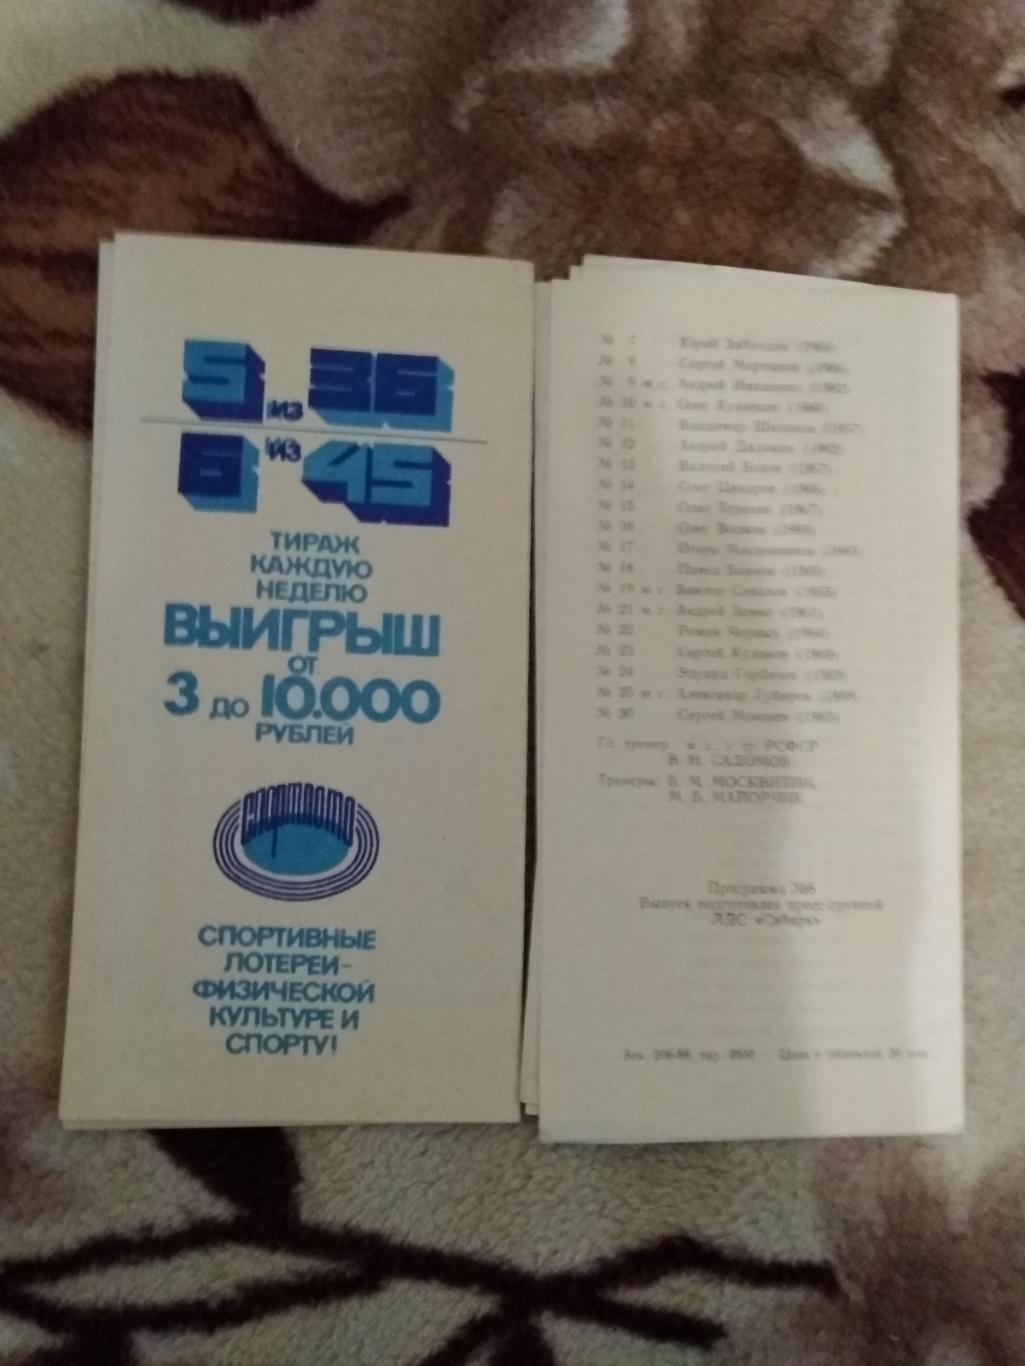 Сибирь (Новосибирск) - Салават Юлаев (Уфа),Торпедо (Тольятти) 11-16.02.1988. 1